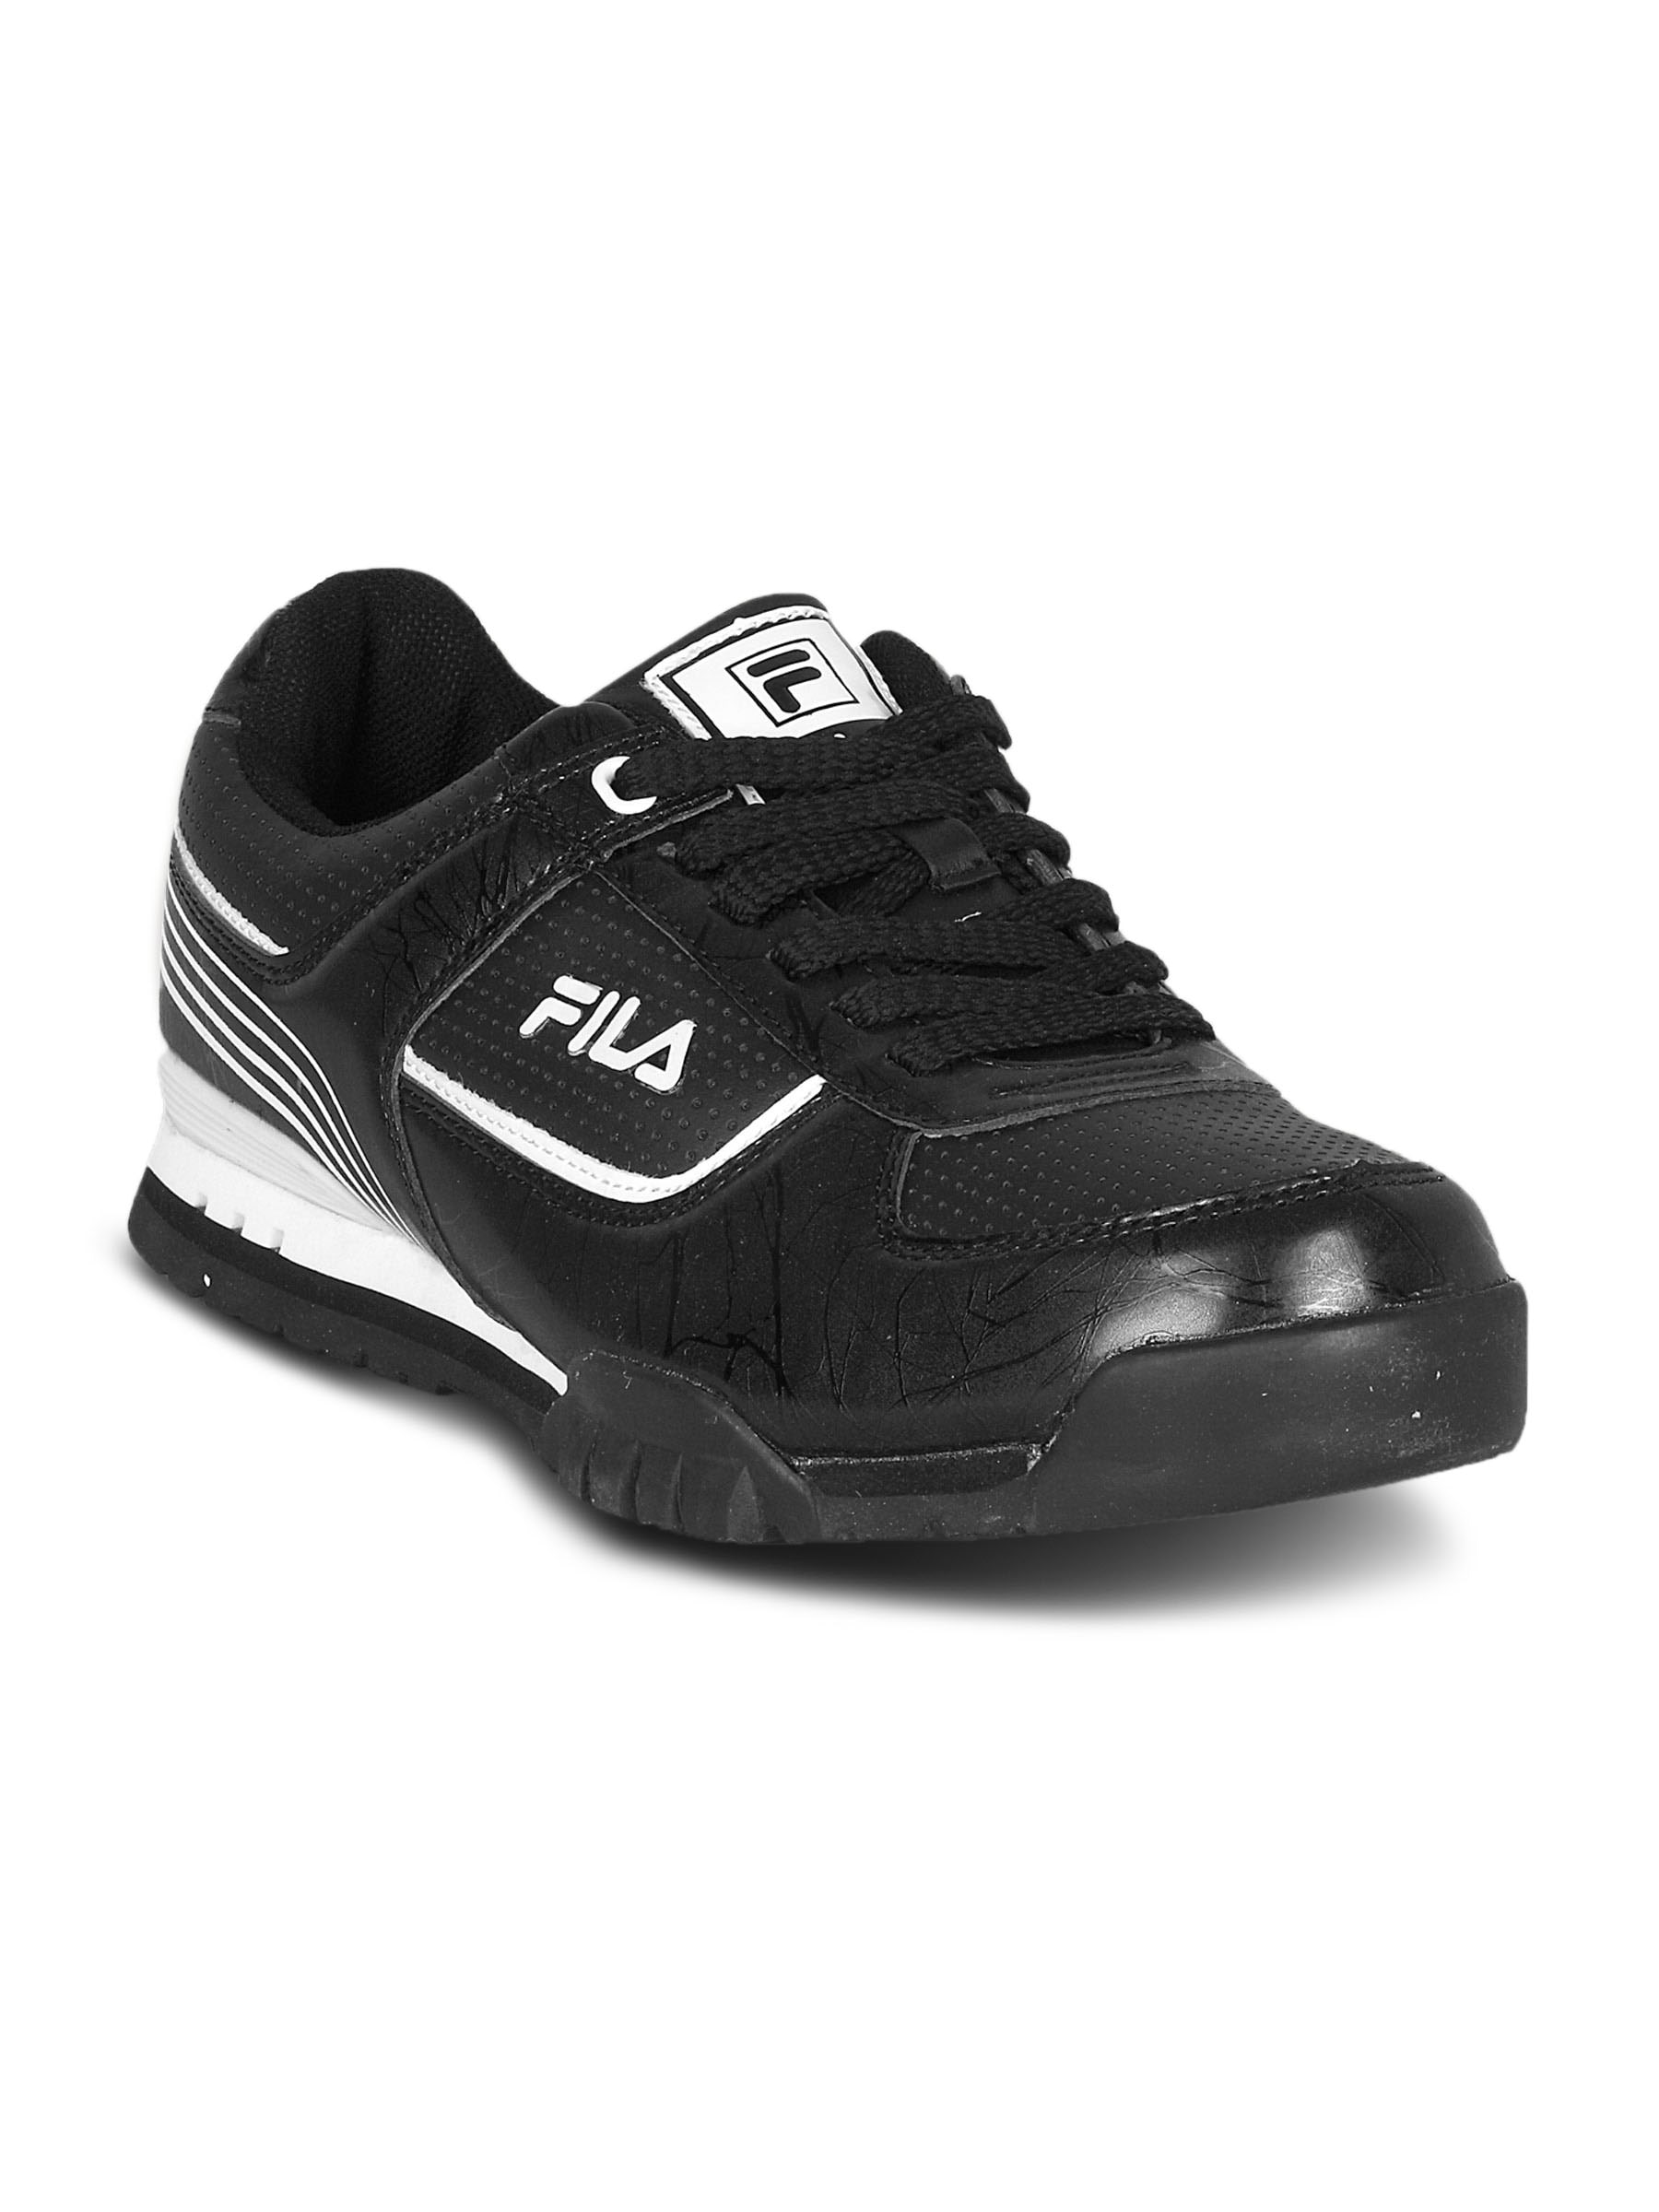 Fila Men's Vision Black White Shoe